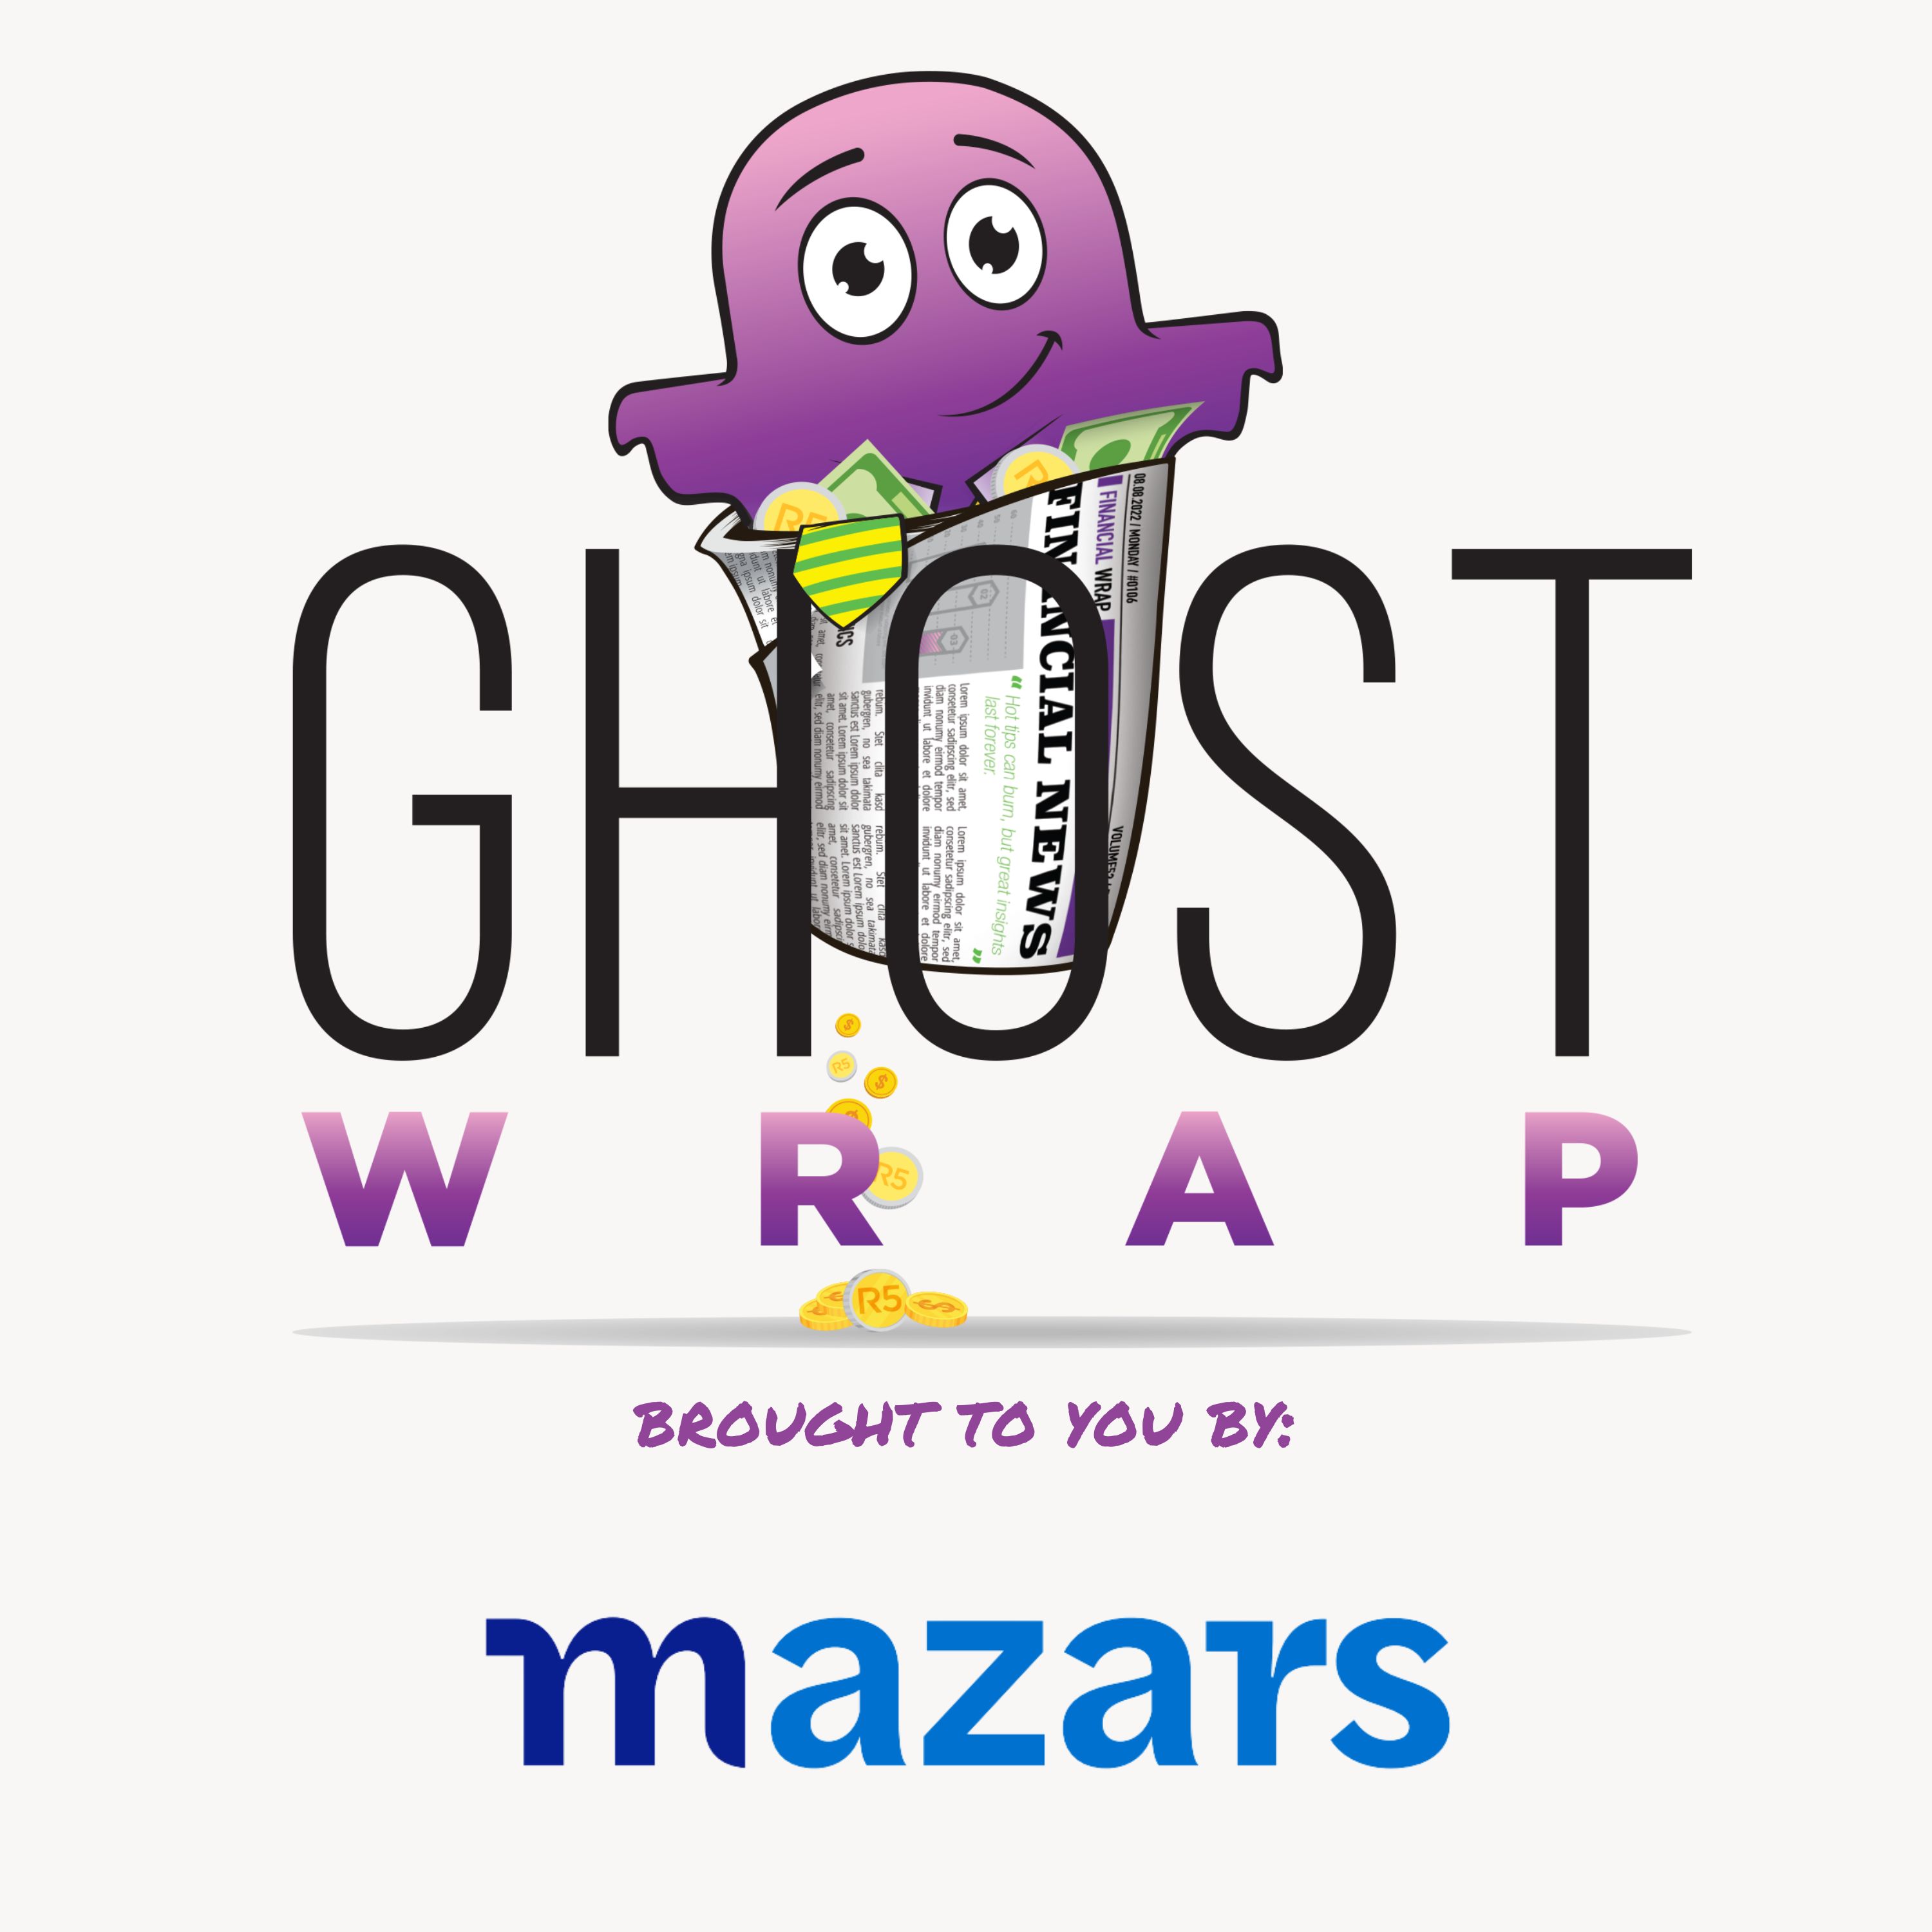 Ghost Wrap #41 (Spur | Adcock Ingram | Bidvest | Bidcorp | NEPI Rockcastle | DRDGOLD | Harmony Gold | BHP | Sasol)